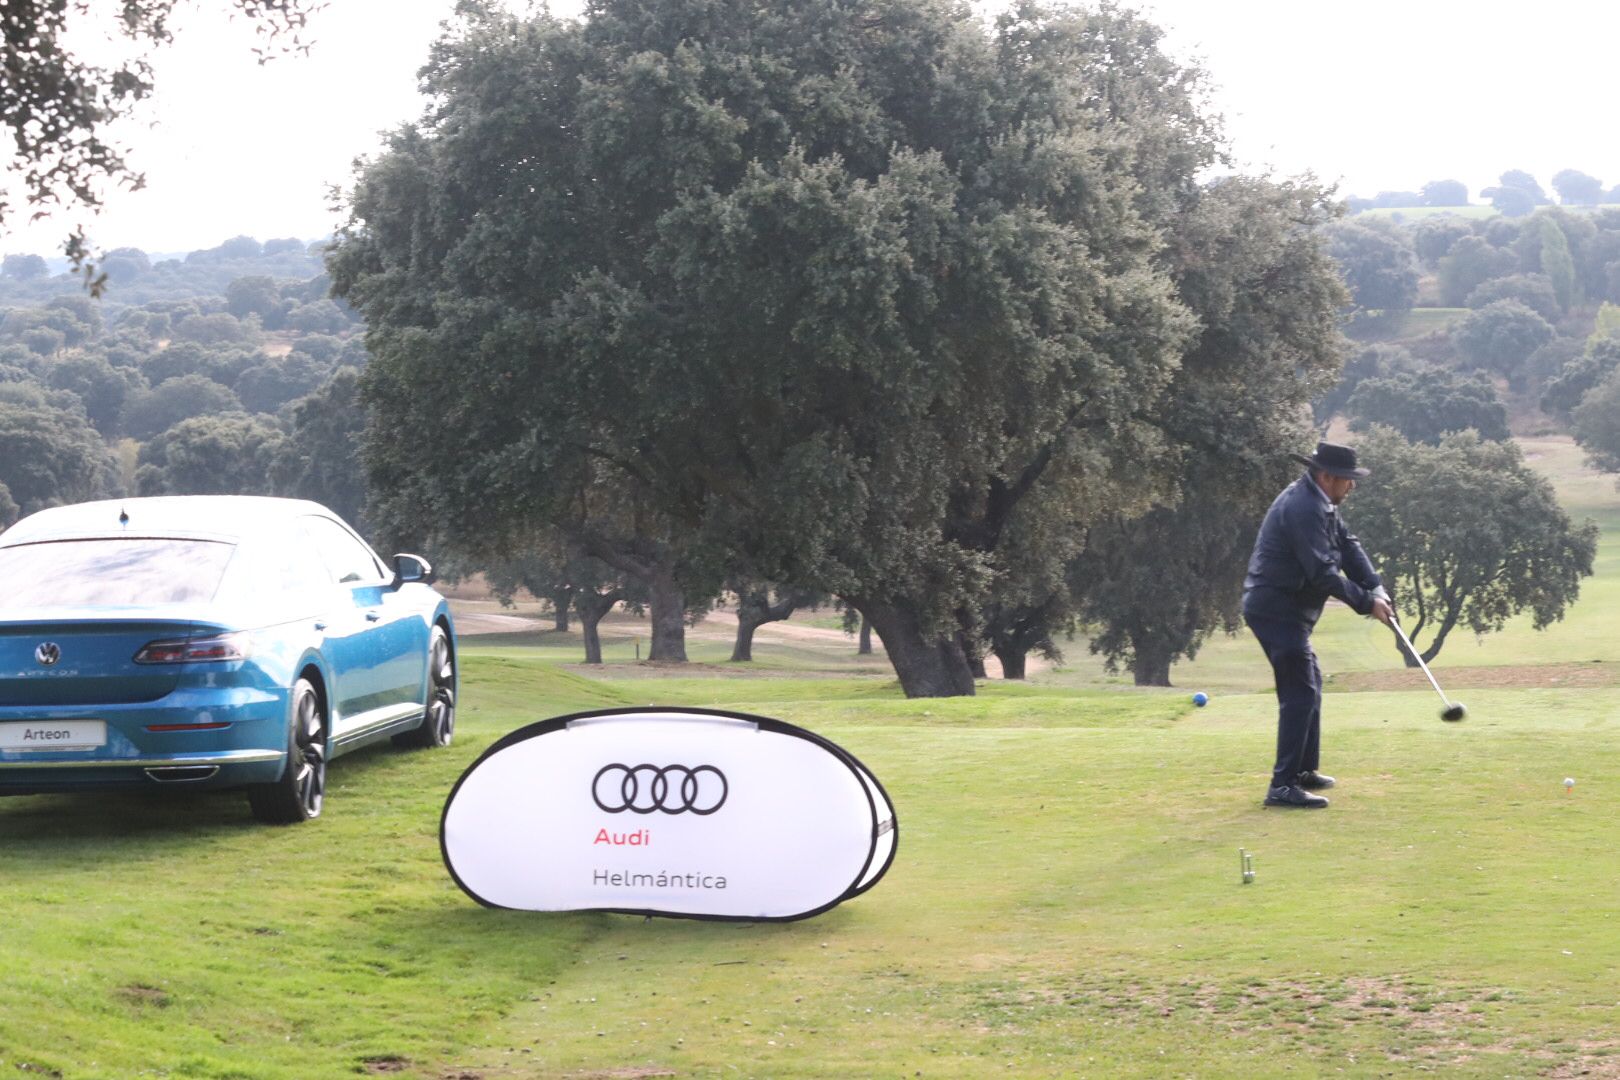 Torneo de Golf Audi Helmántica 31 aniversario (4)